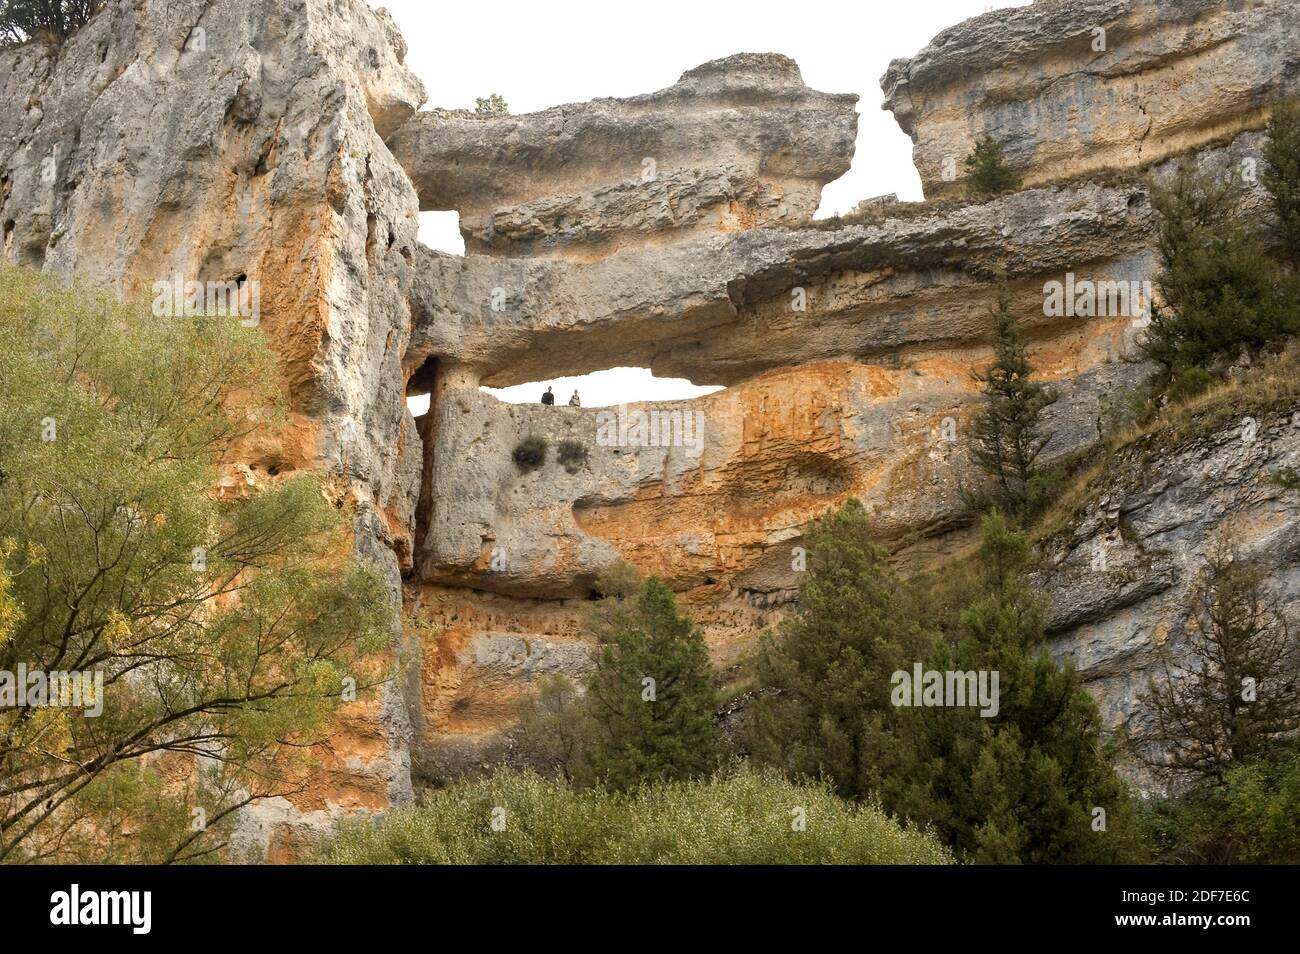 Lobos River Canyon Natural Park, natural window. Soria province, Castilla y Leon, Spain. Stock Photo